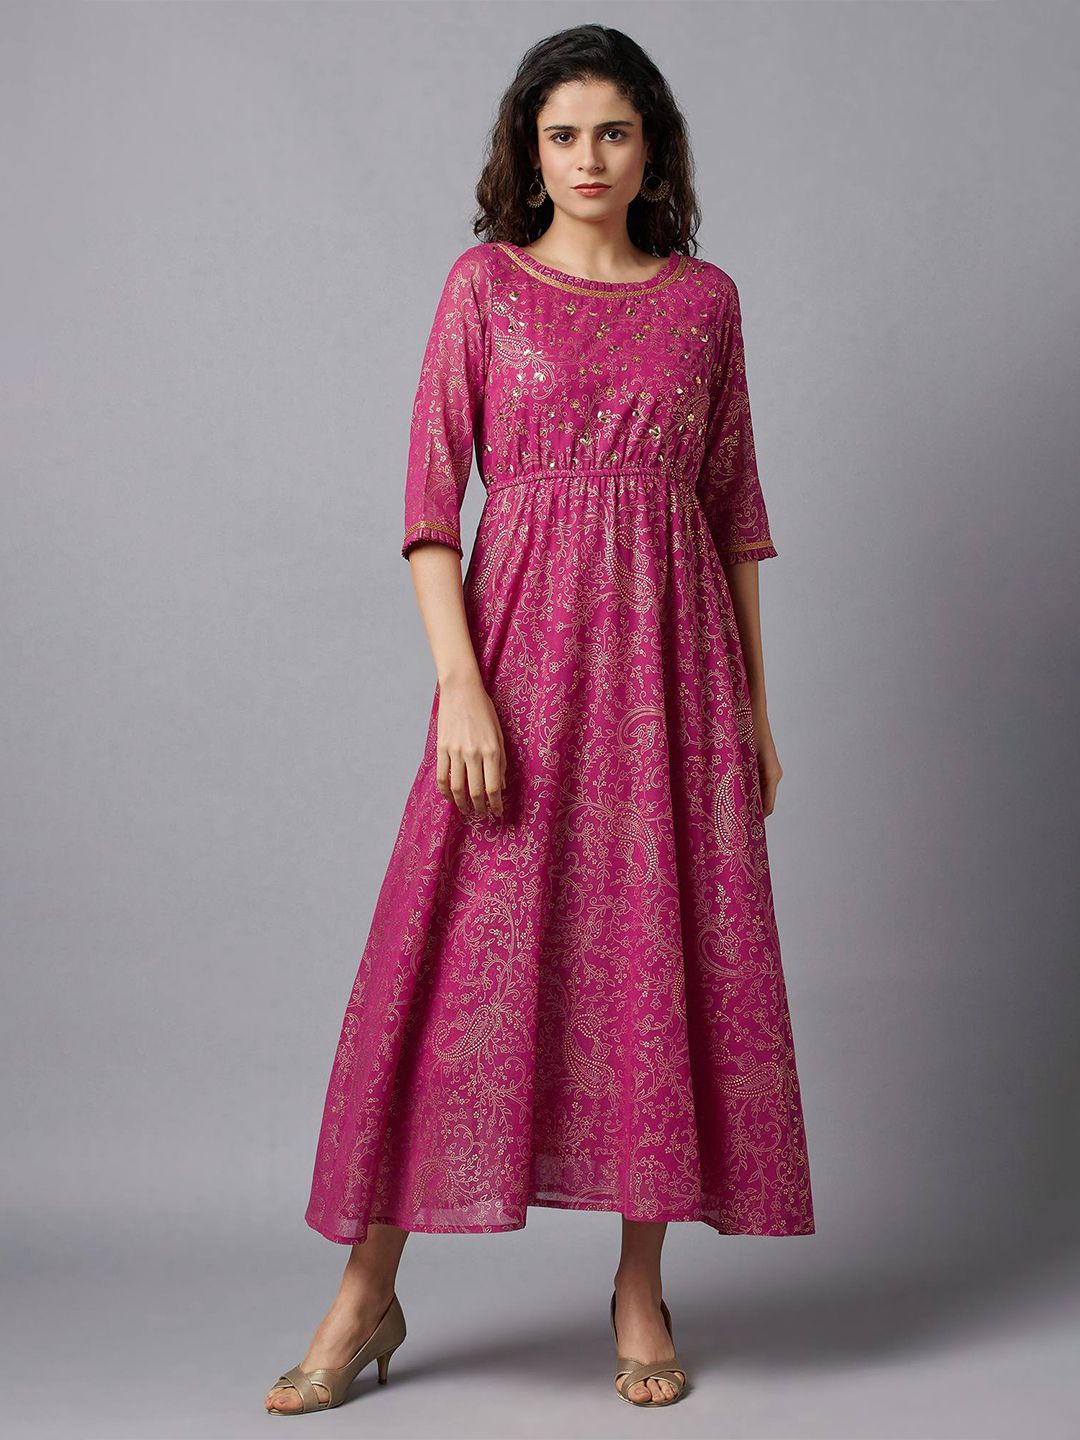 AURELIA Pink Ethnic Motifs Embellished Three-Quarter Sleeves Maxi Dress Price in India